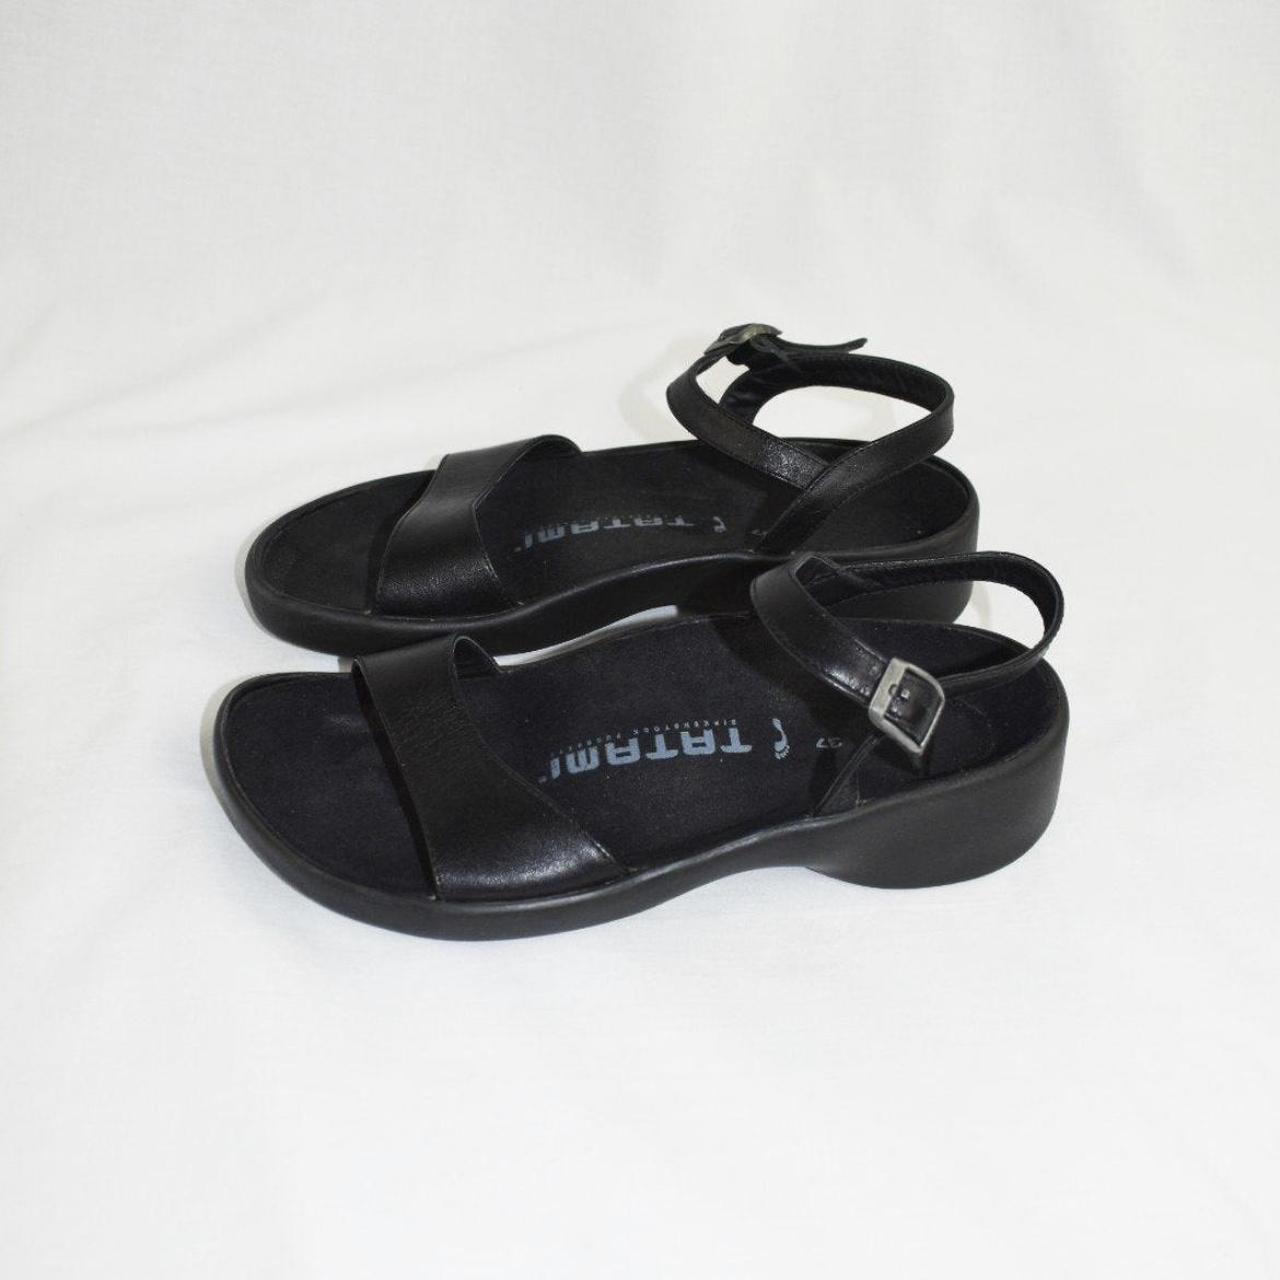 Product Image 1 - Black Mary Jane chunky sandals